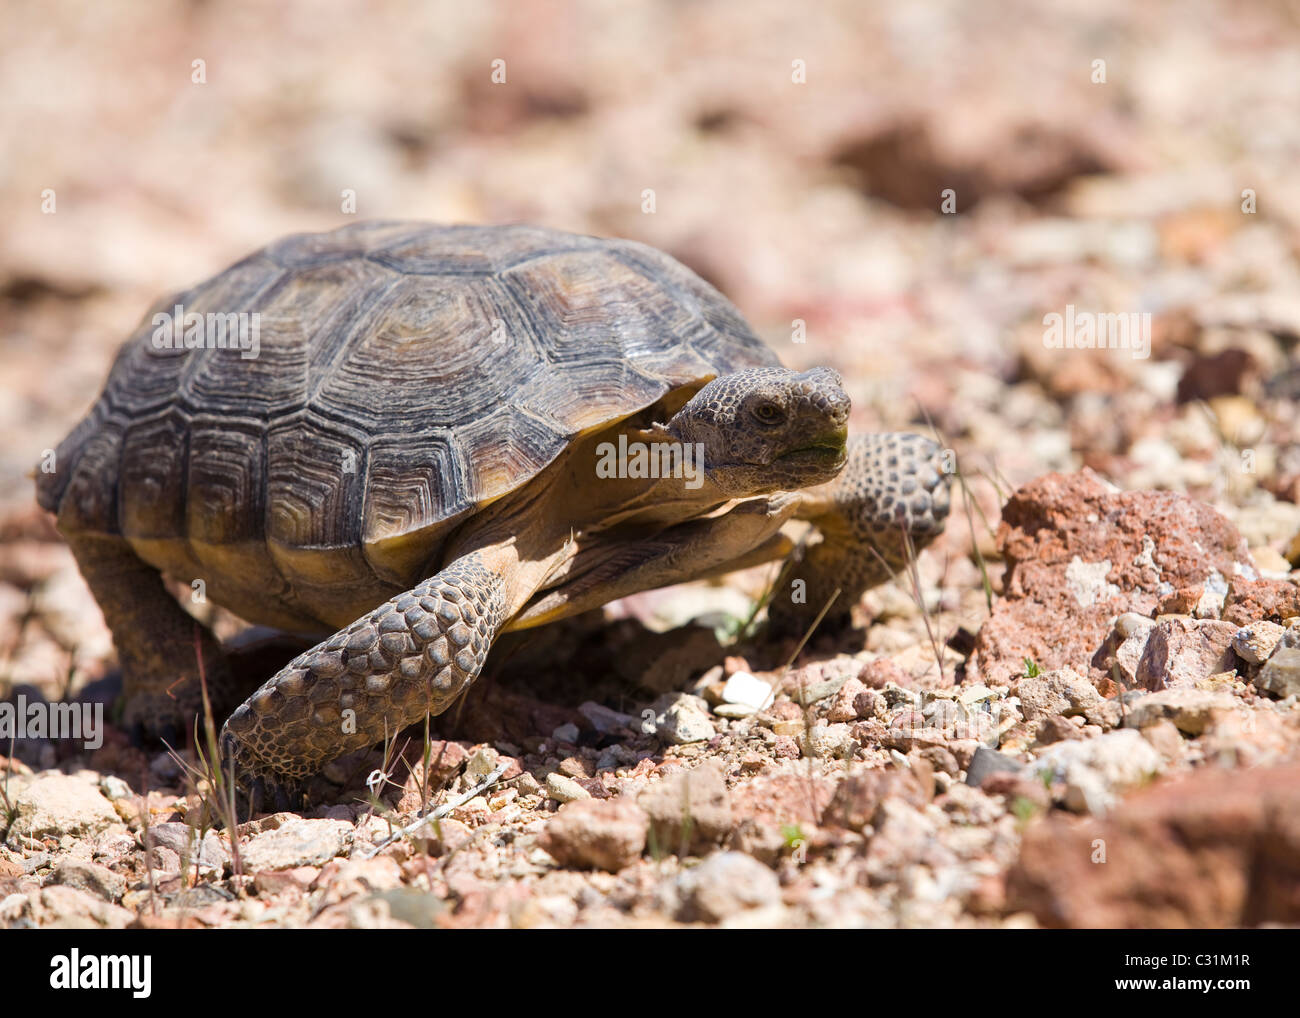 Mojave desert tortoise (Gopherus agassizii) in its natural habitat - Mojave, California USA Stock Photo